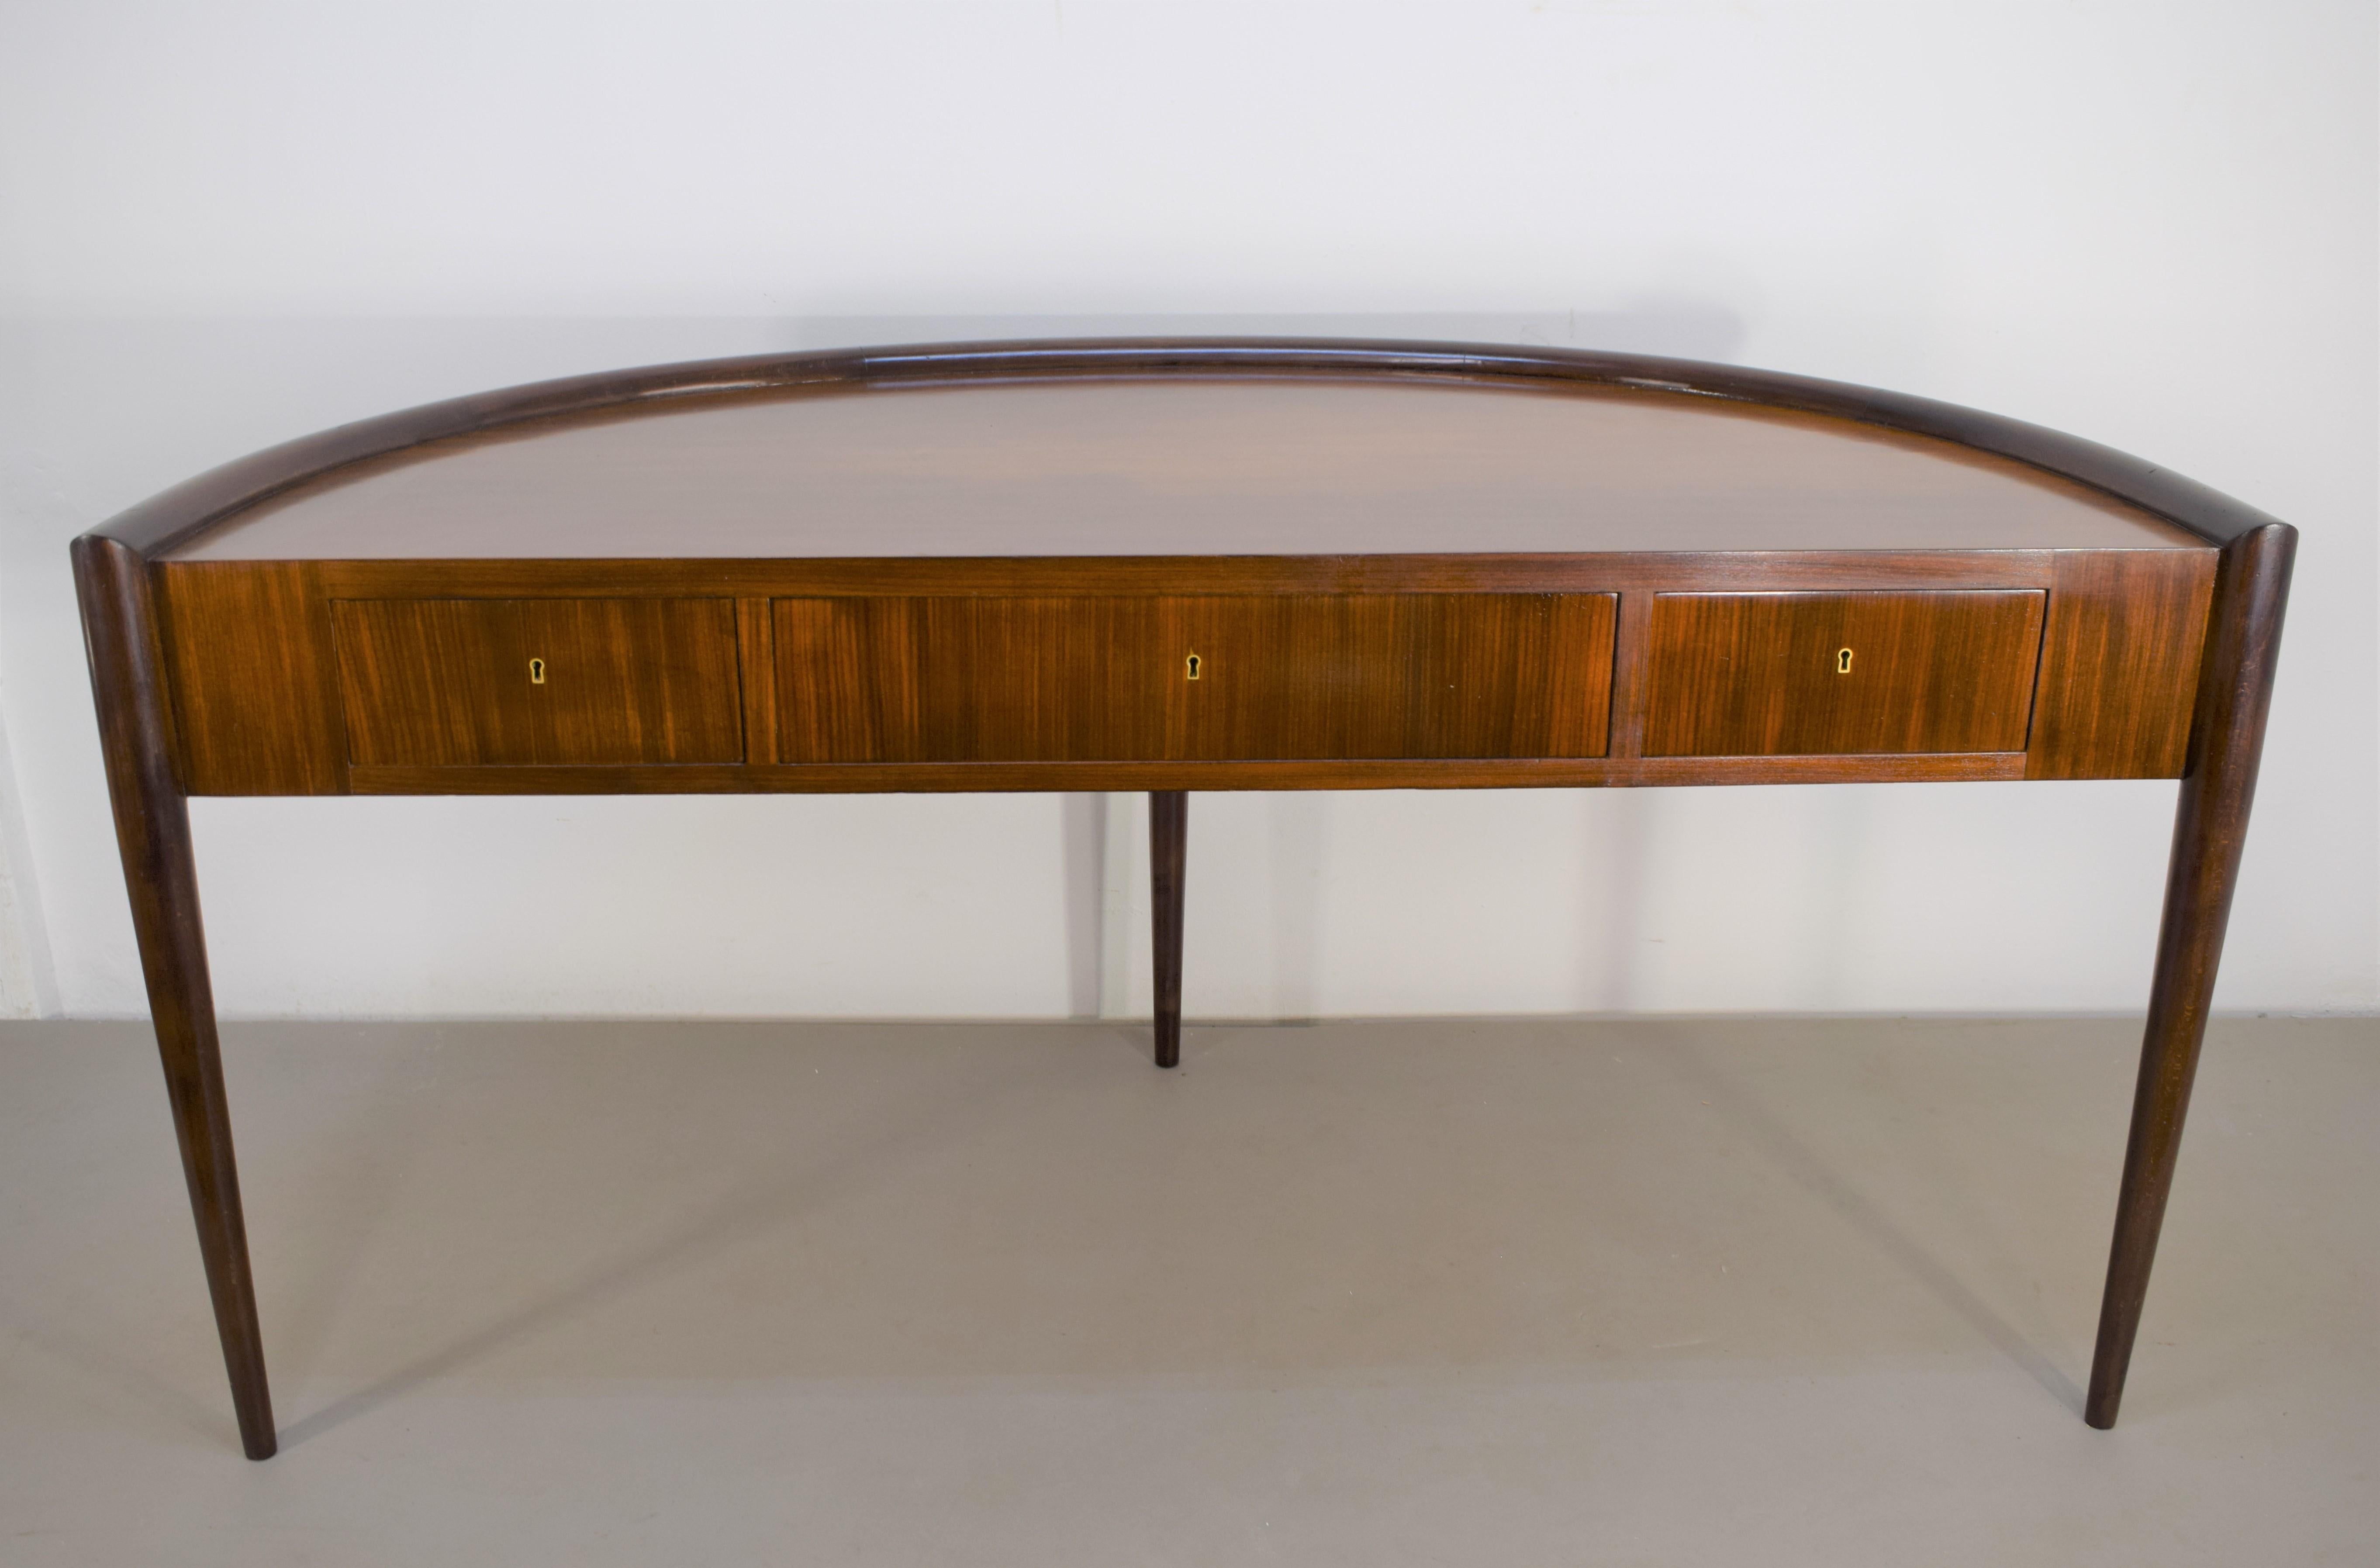 Italian writing desk in mahogany wood, 1960s.
Dimensions: H= 81 cm; W= 164 cm; D= 78 cm.